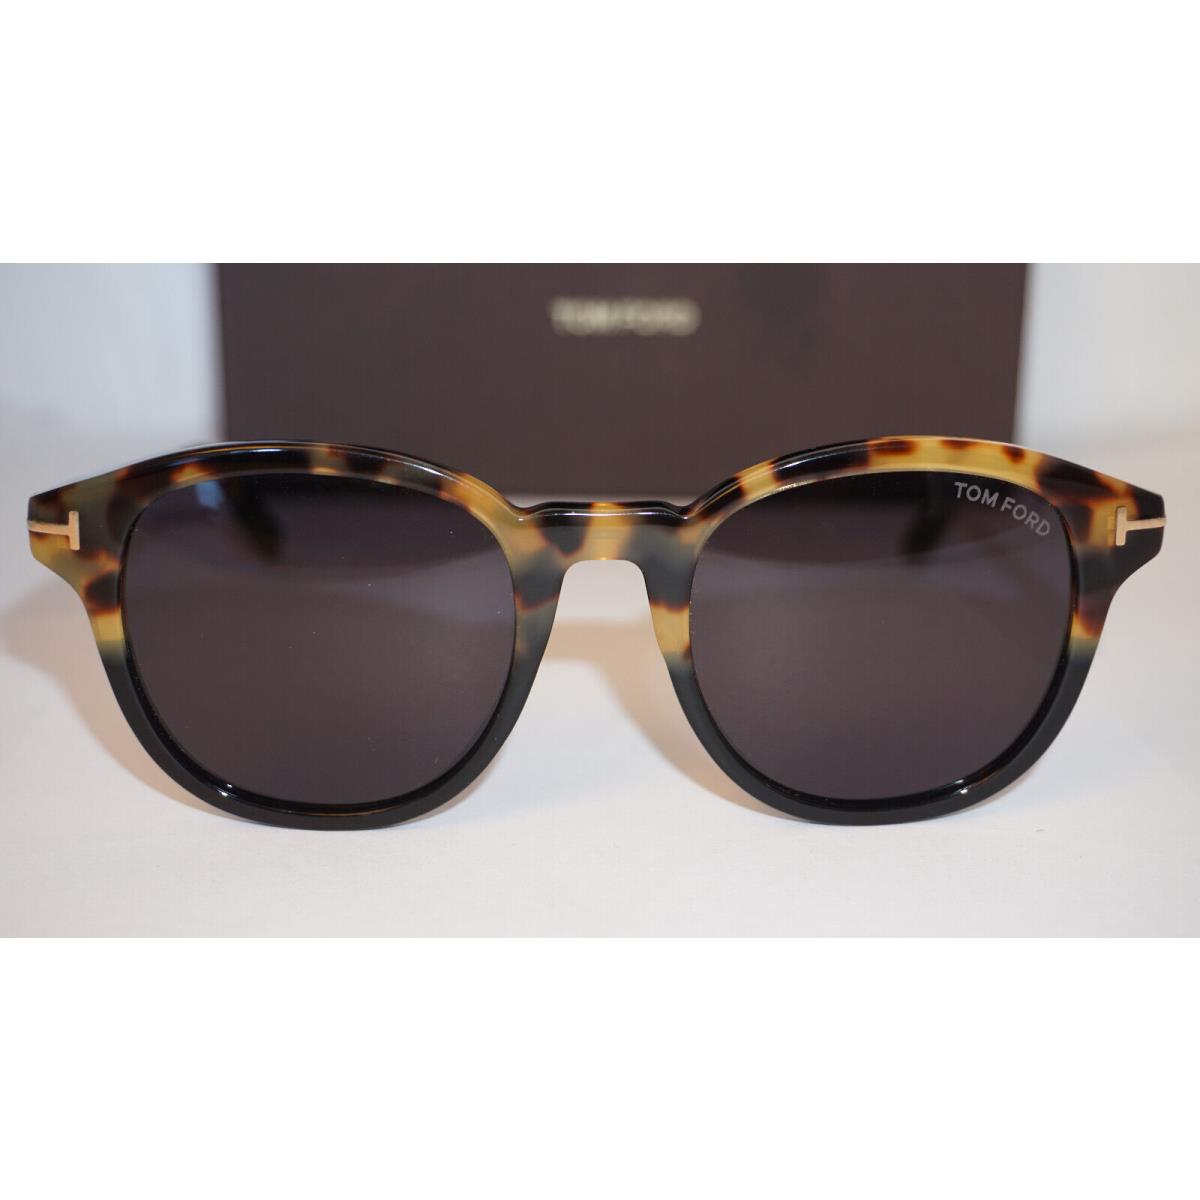 Tom Ford Sunglasses Havana Gradient Black Grey Jameson TF752 56A 52 21 145  - Tom Ford sunglasses - 889214091123 | Fash Brands